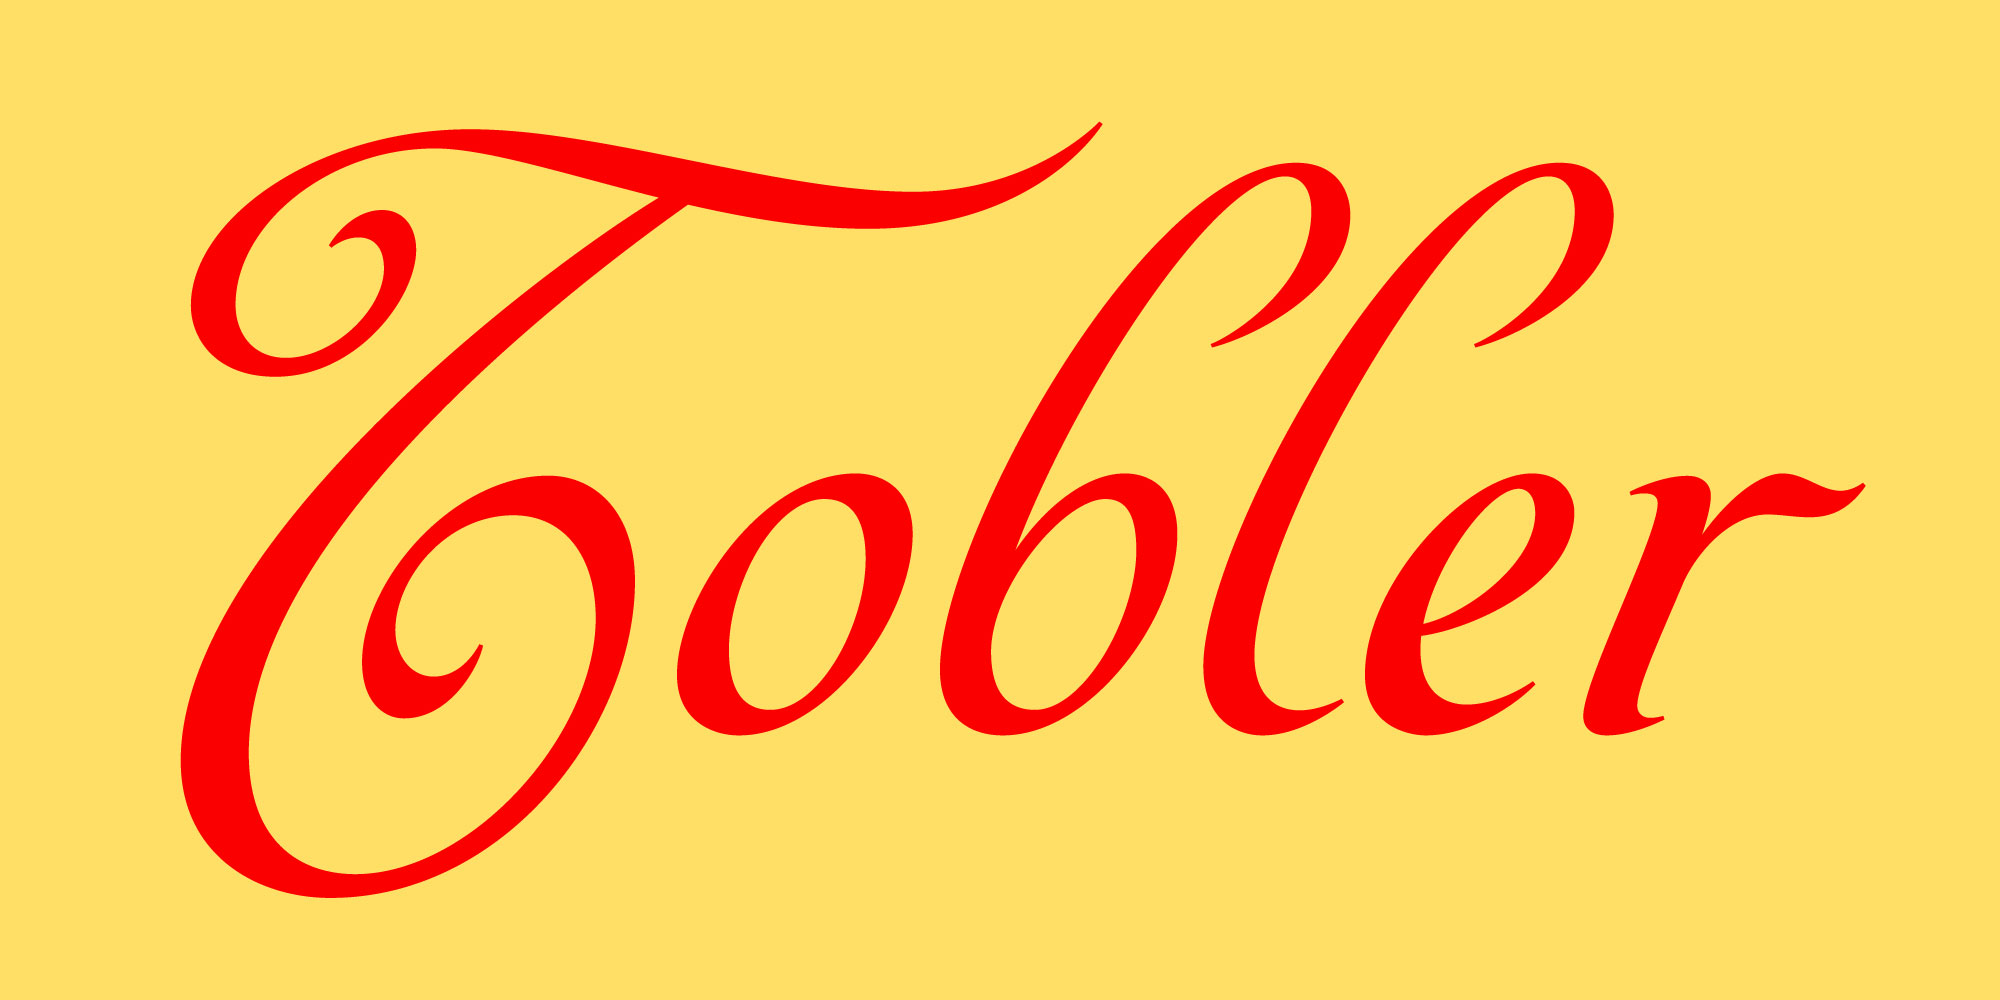 Tobler script